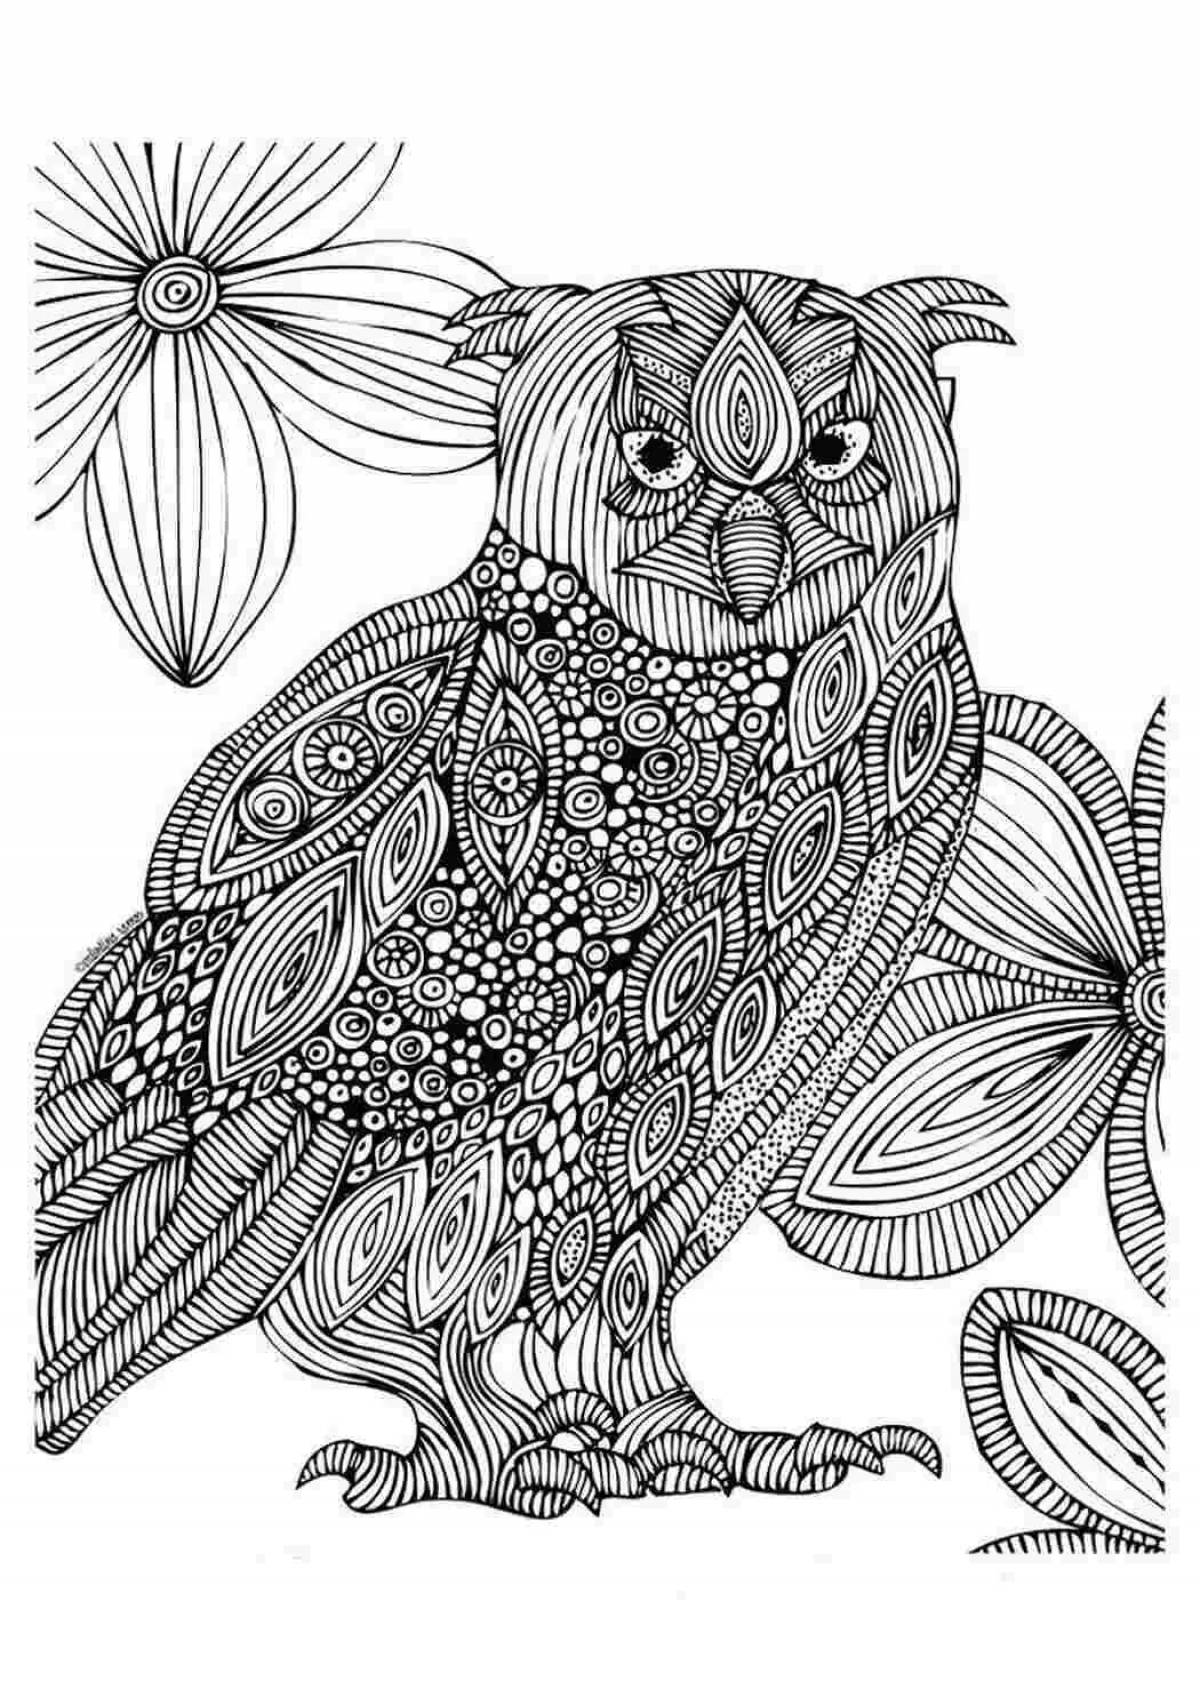 Impressive complex owl coloring book